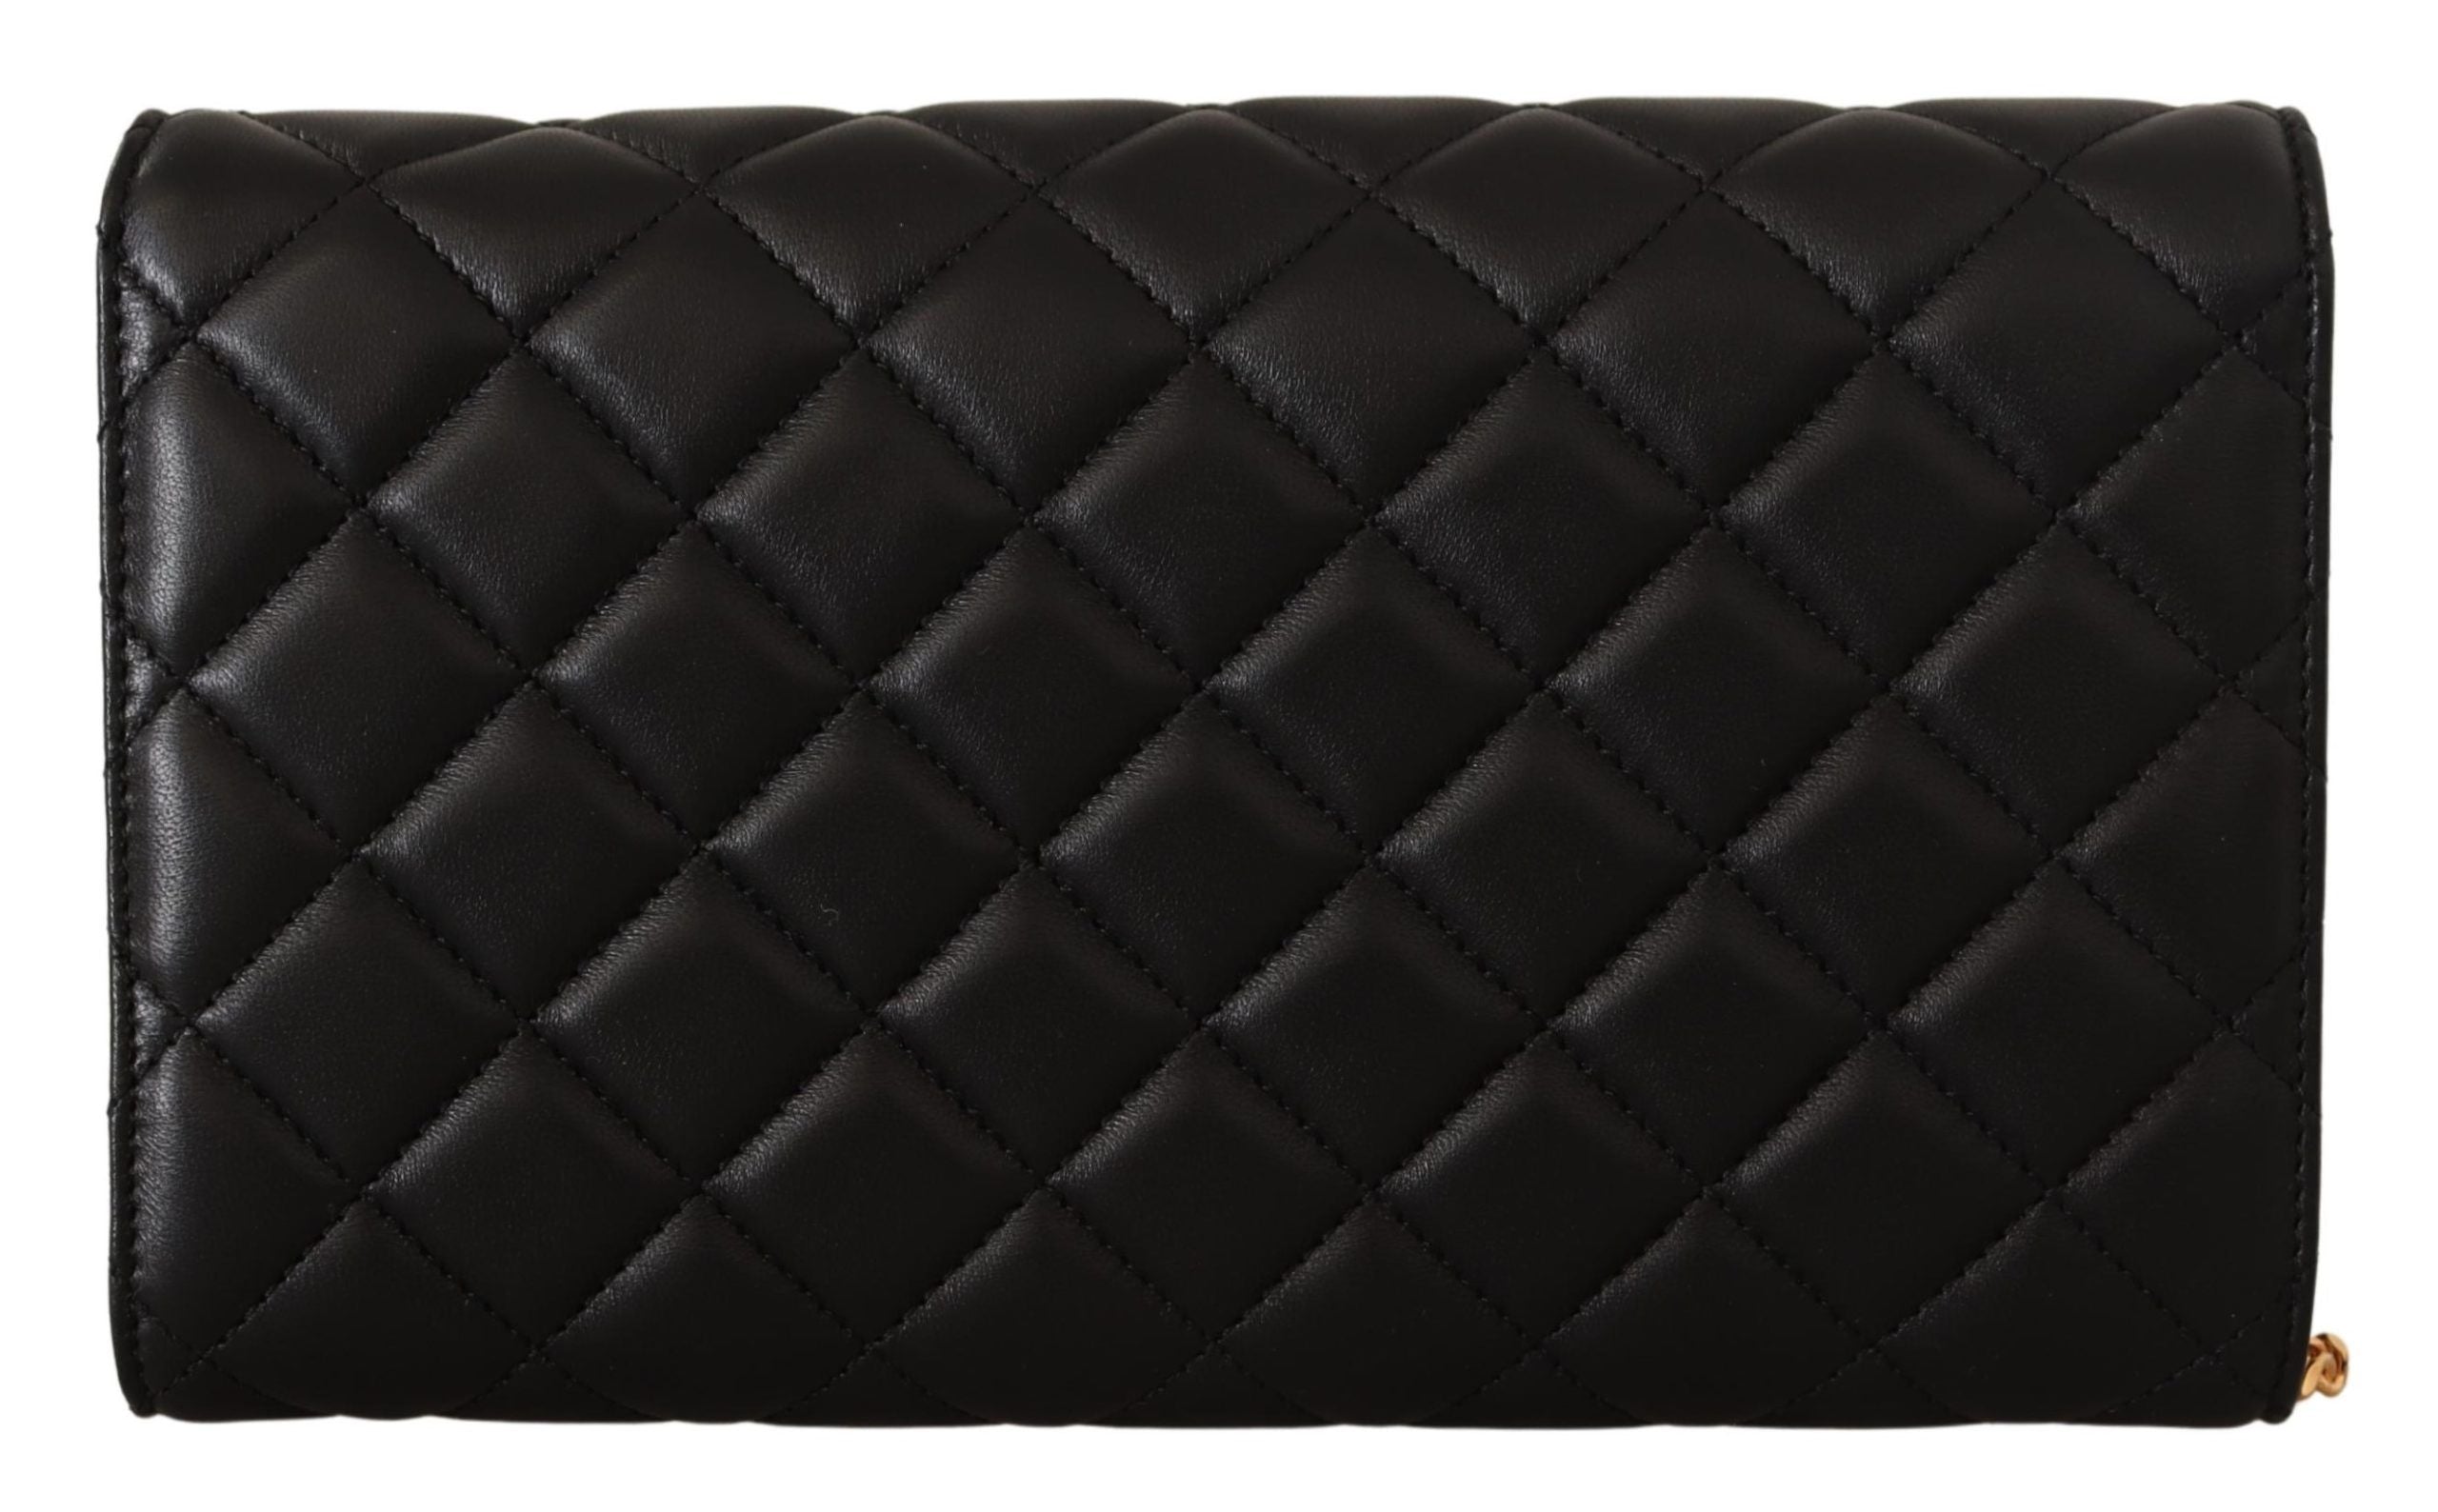 Versace Black Nappa Leather Medusa Evening Bag